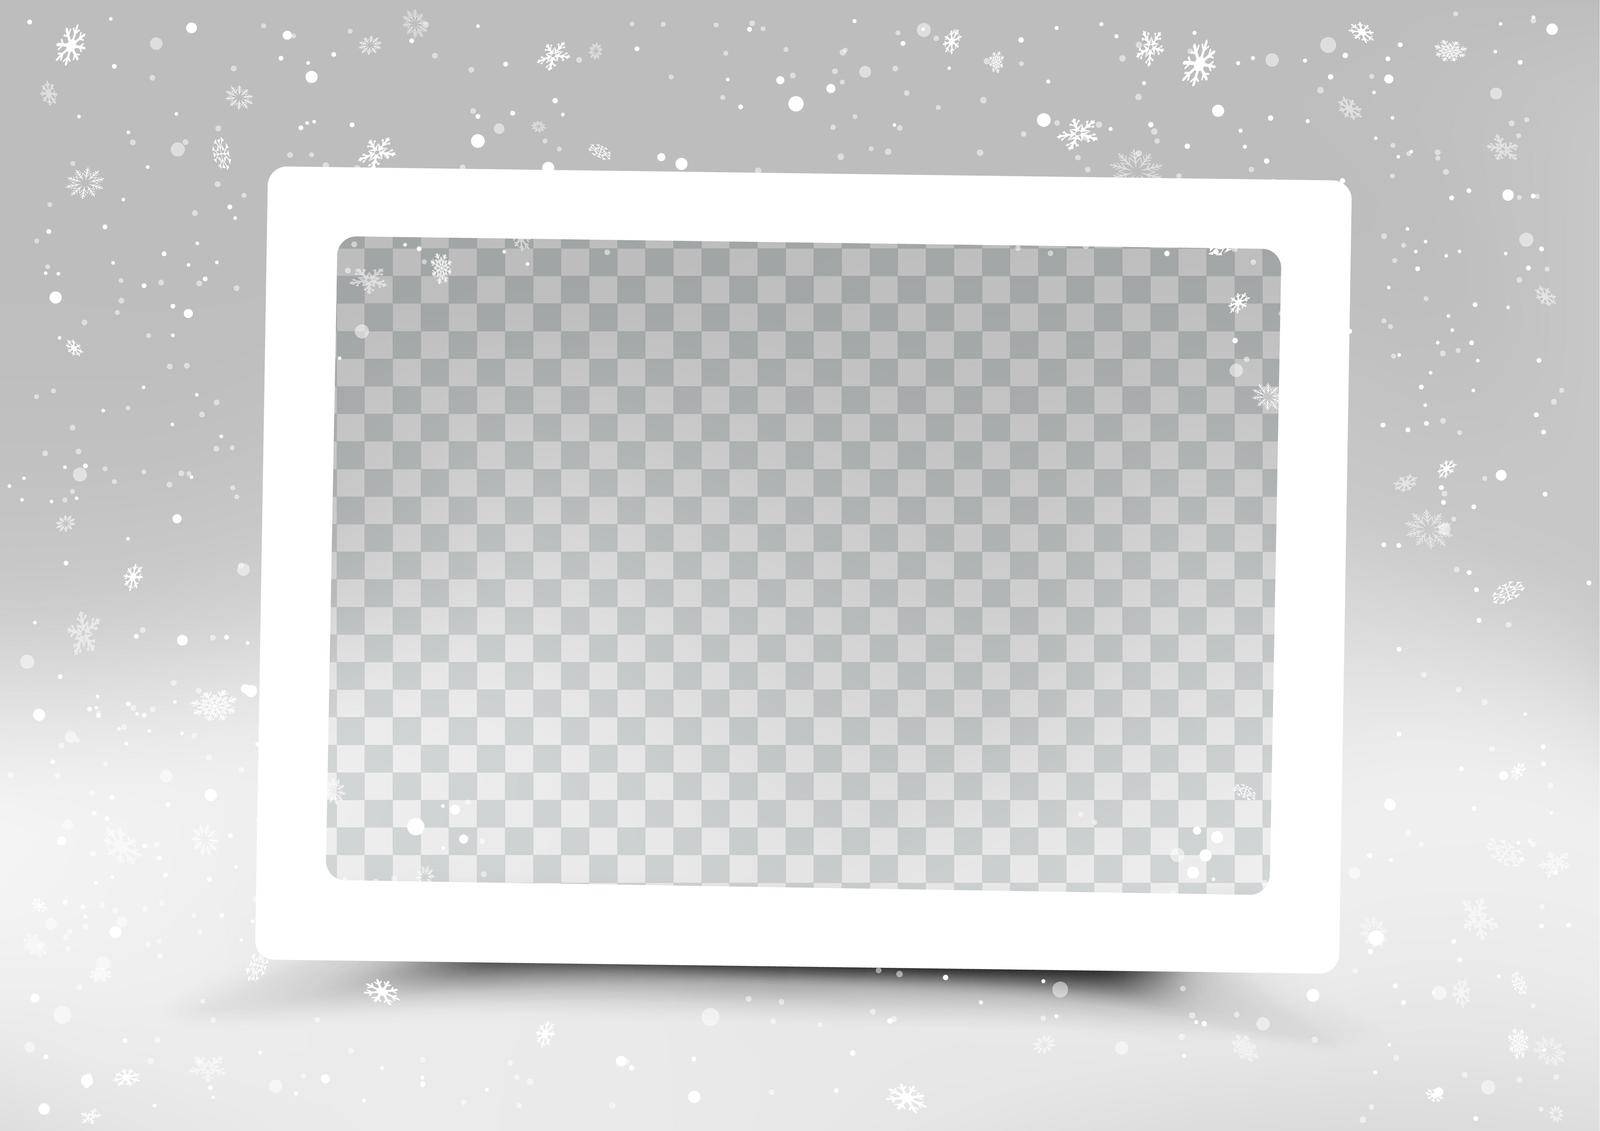 Christmas white rectangle photo frame template mockup. Holiday image framework background with snowfall. Seasonal picture border decoration backdrop